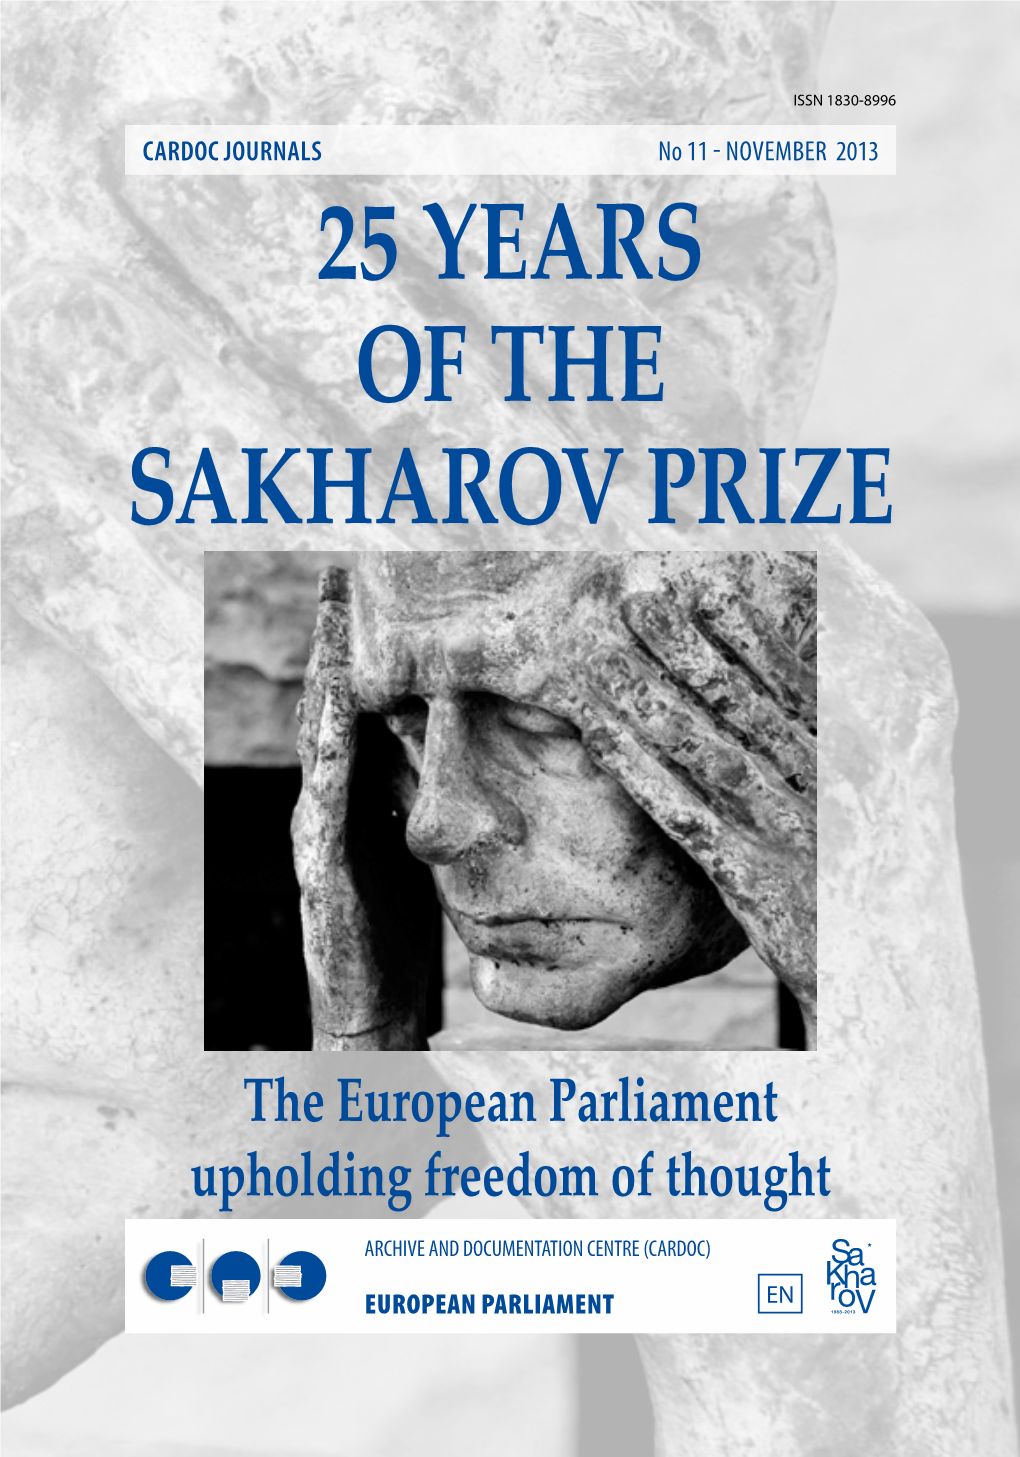 History of the Sakharov Prize 1988-2013 (PDF